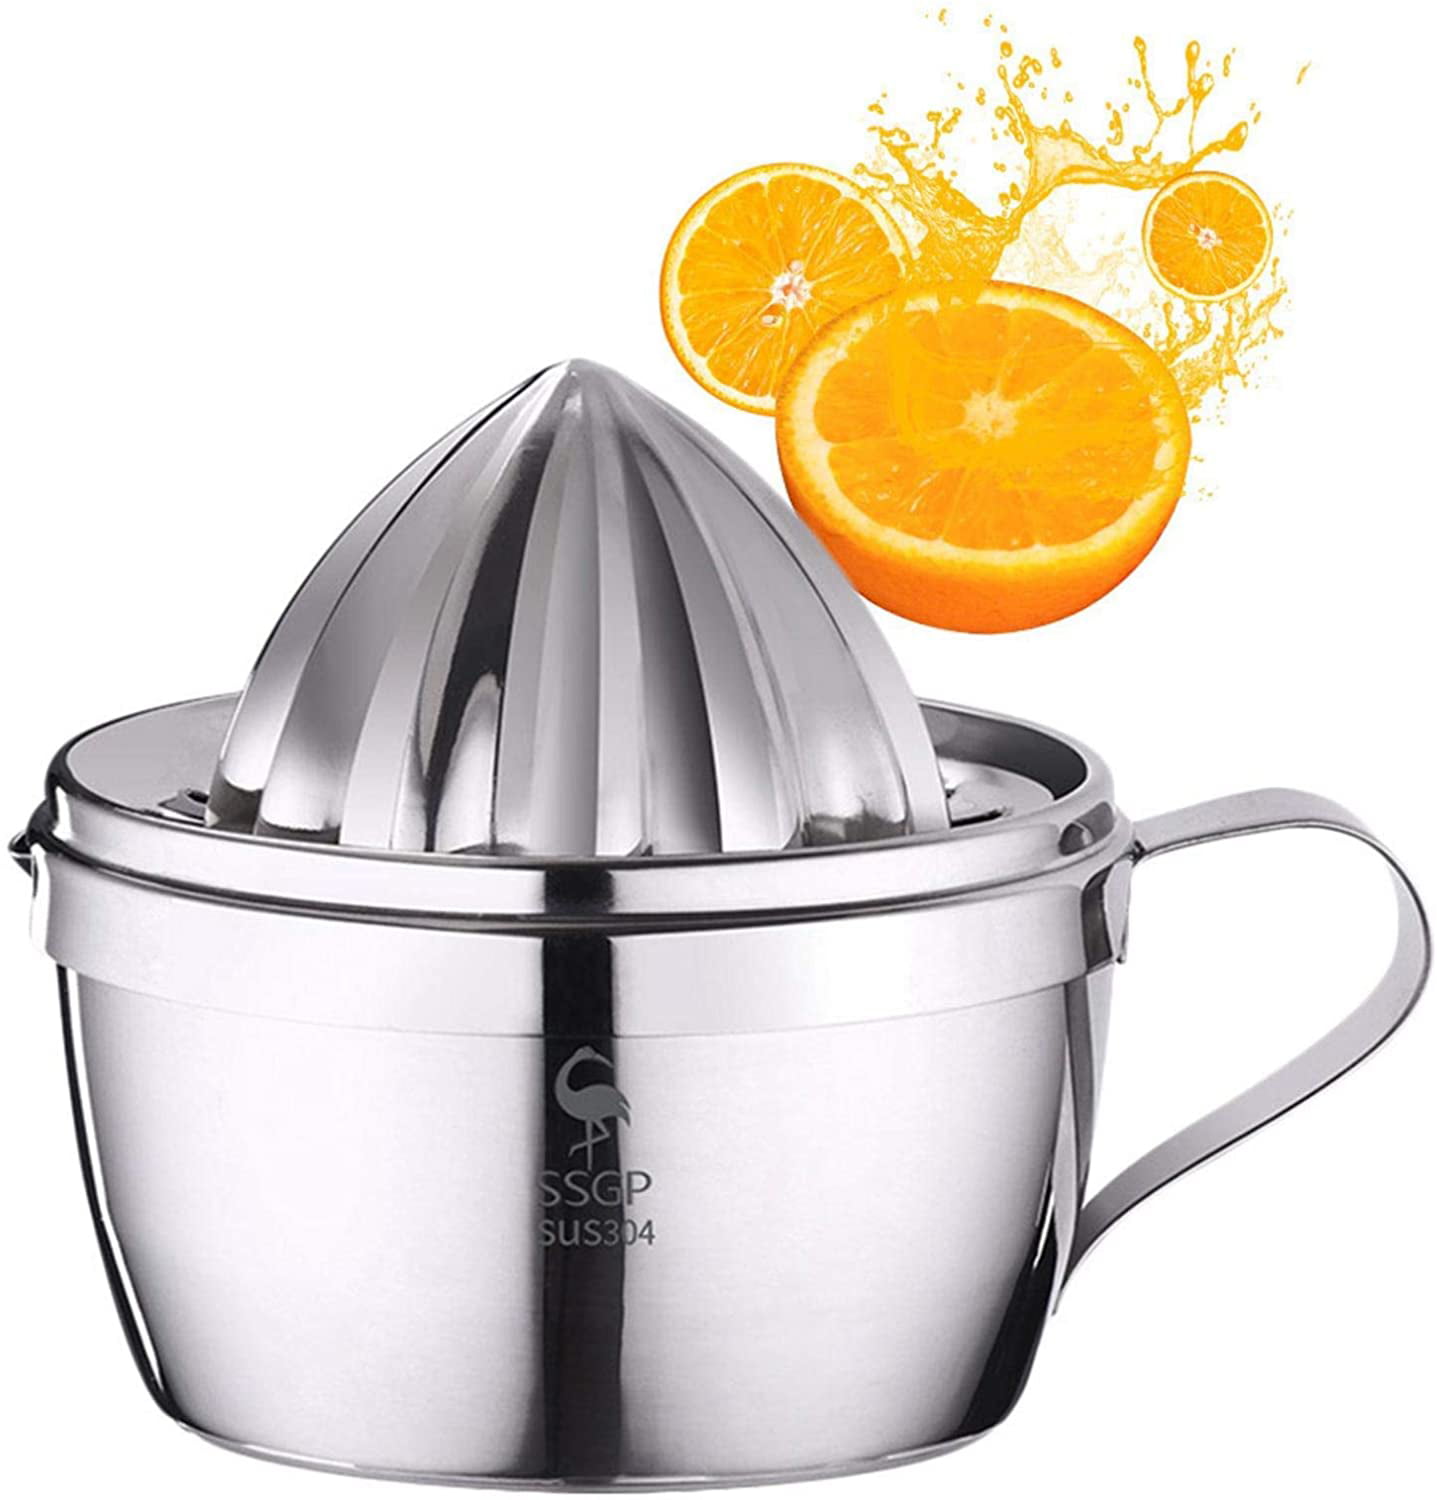 Stainless Steel Juicer Manual Juice Orange Lime Lemon Fruit Squeezer Maker Strainer with Bowl Handle Pour Spout for Home Bar Kitchen 